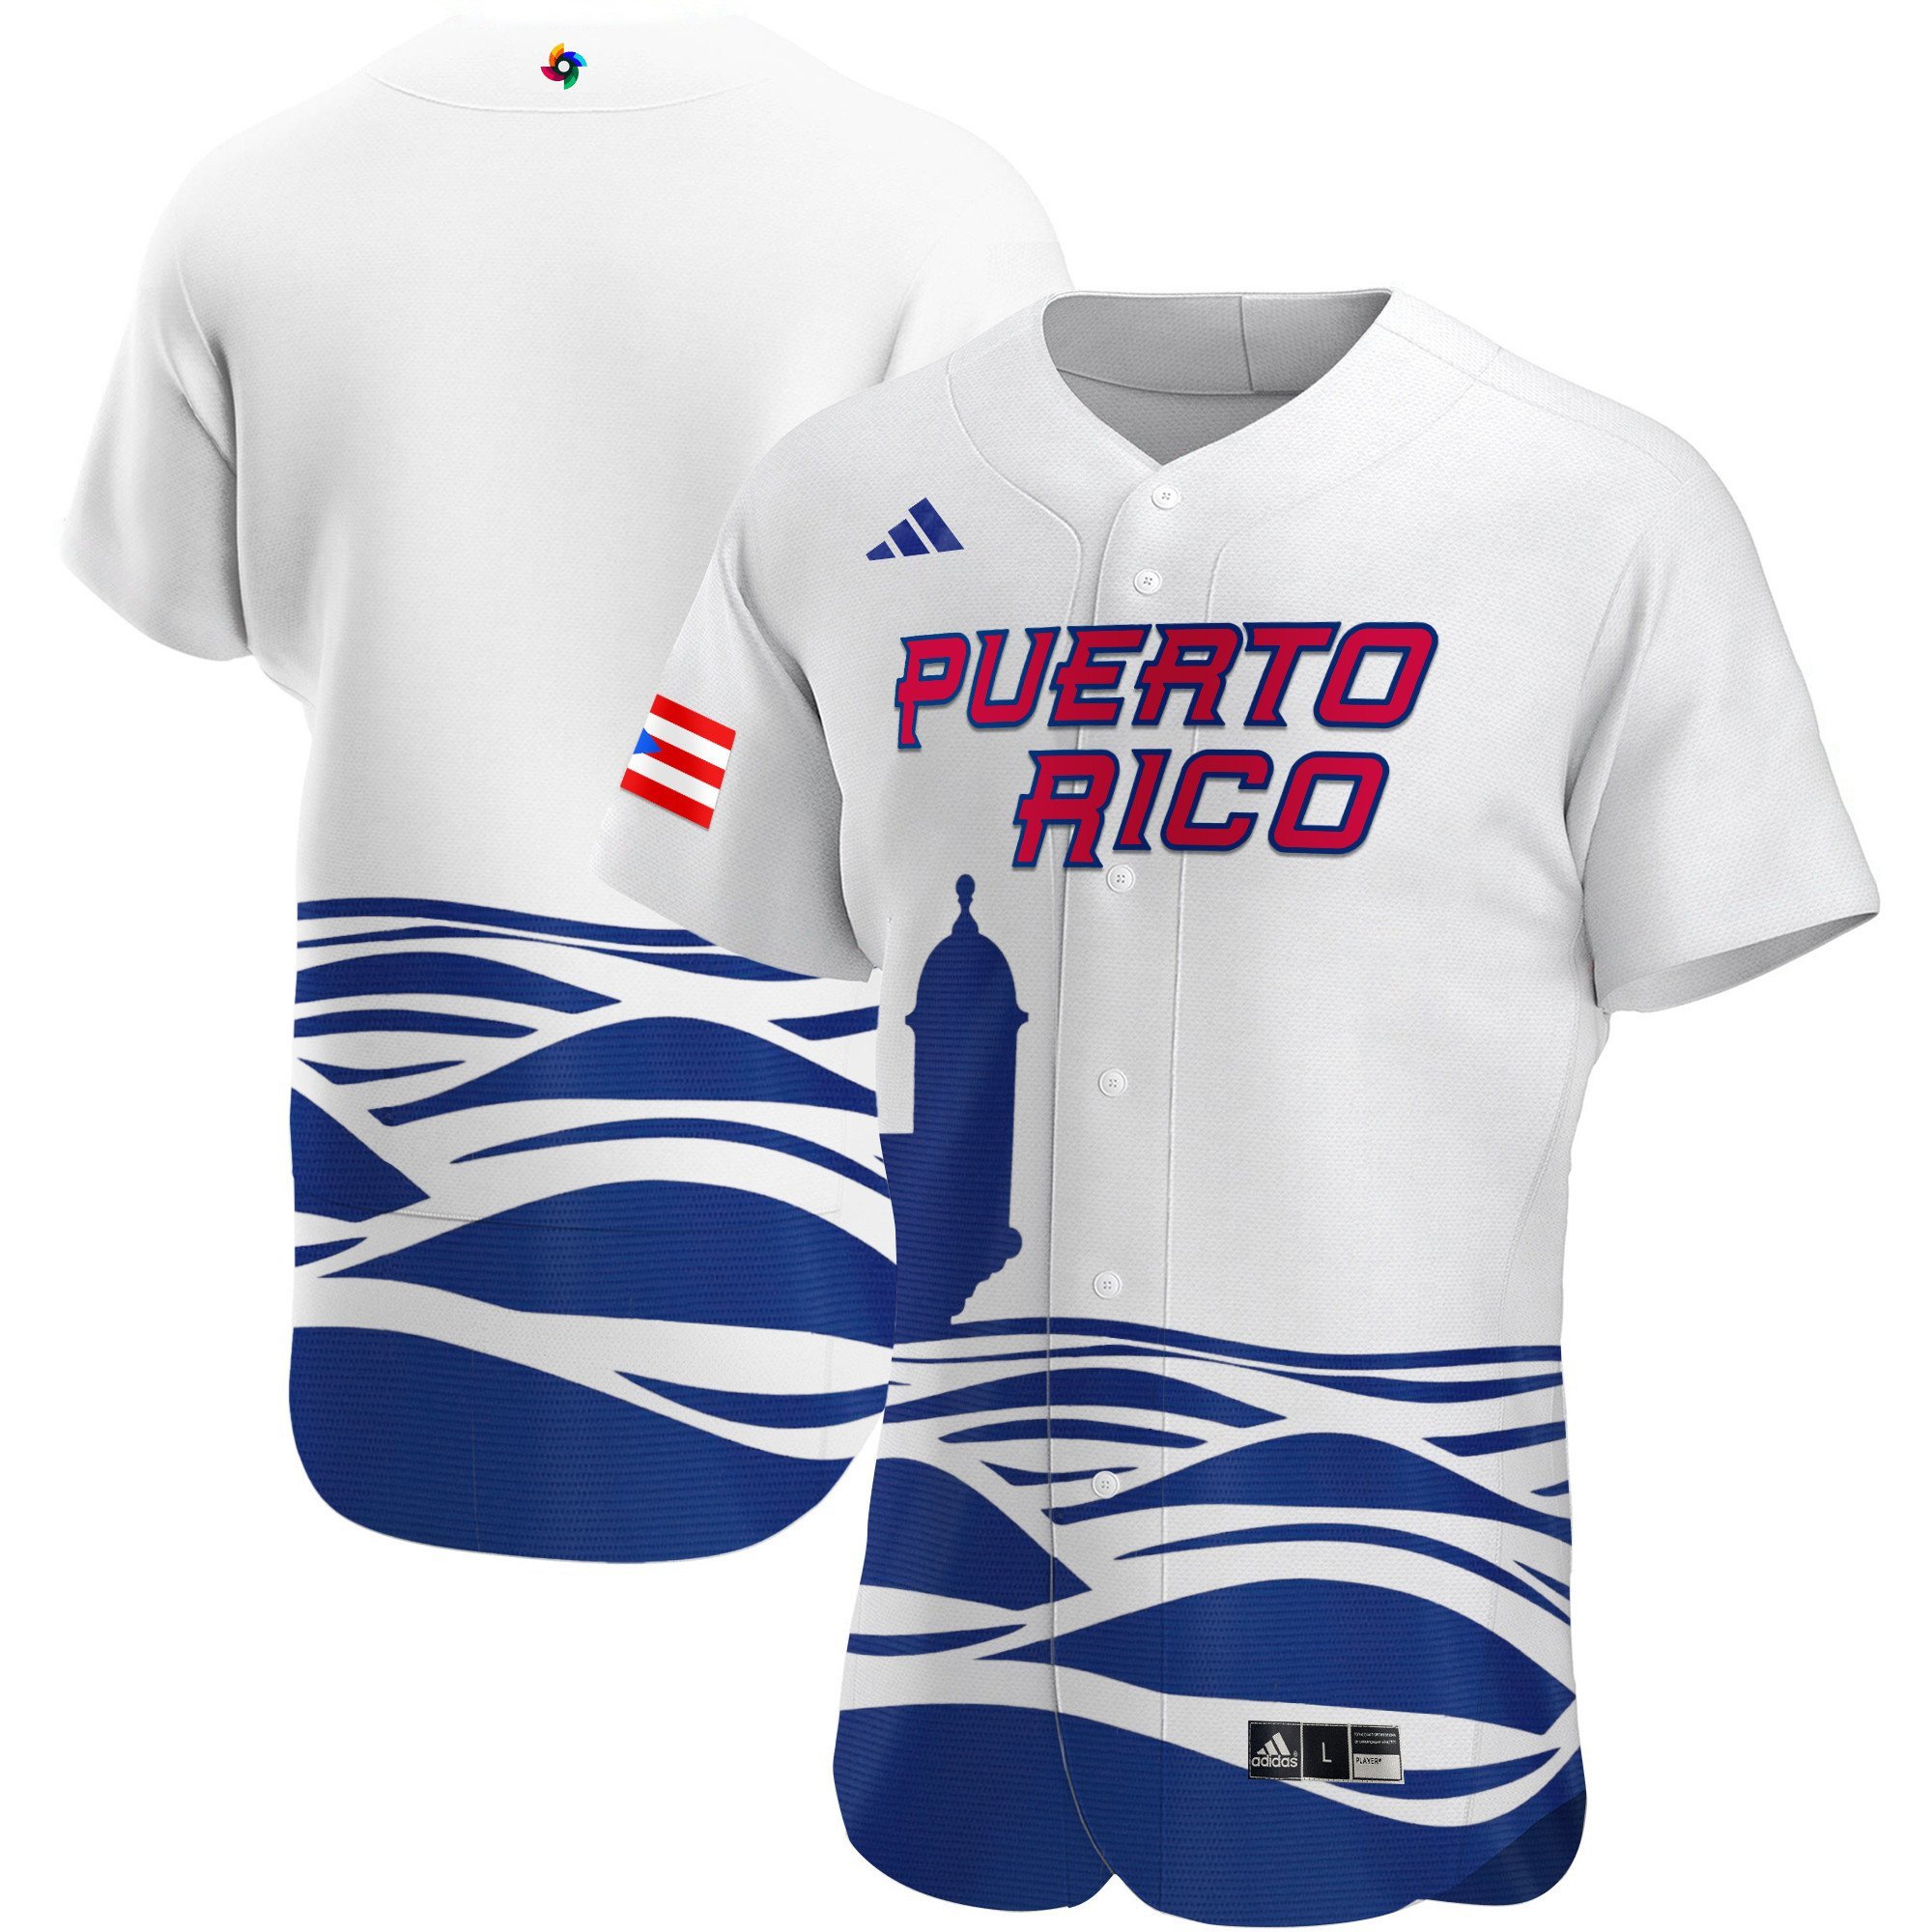 Puerto Rico WBC World Baseball Classic Jersey Puer' Unisex Premium